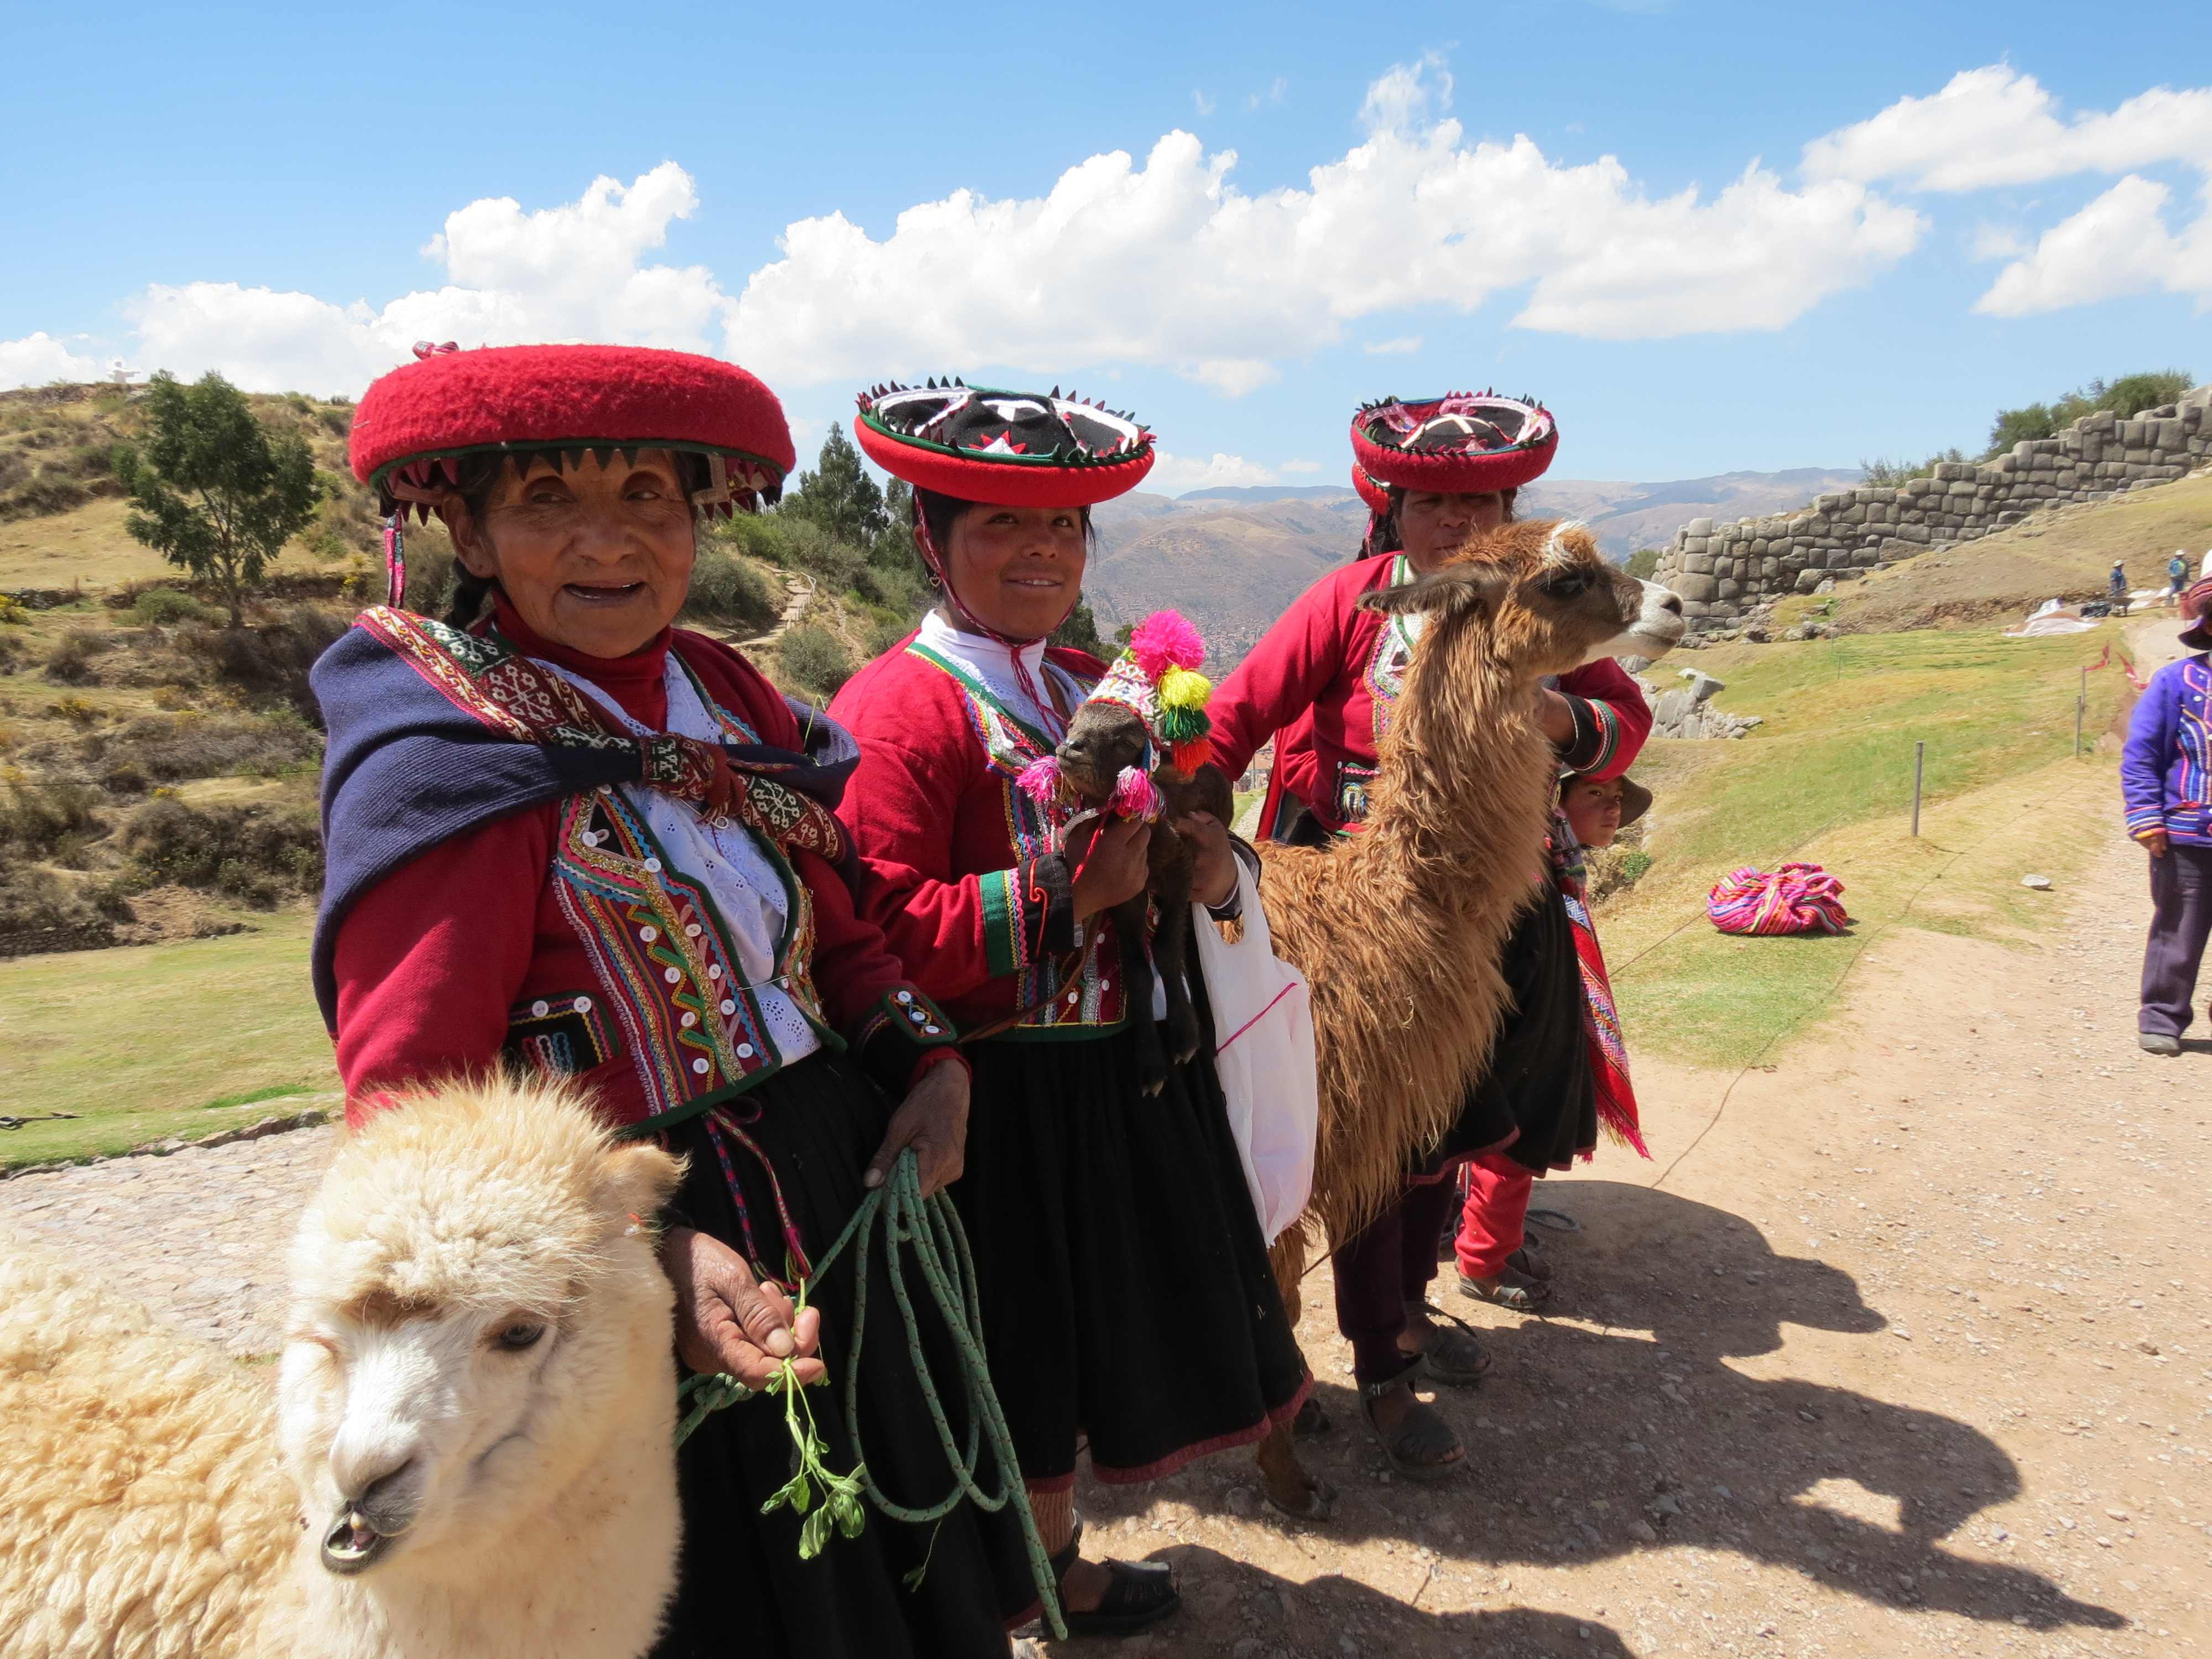 Day 6 - Explore around Cusco